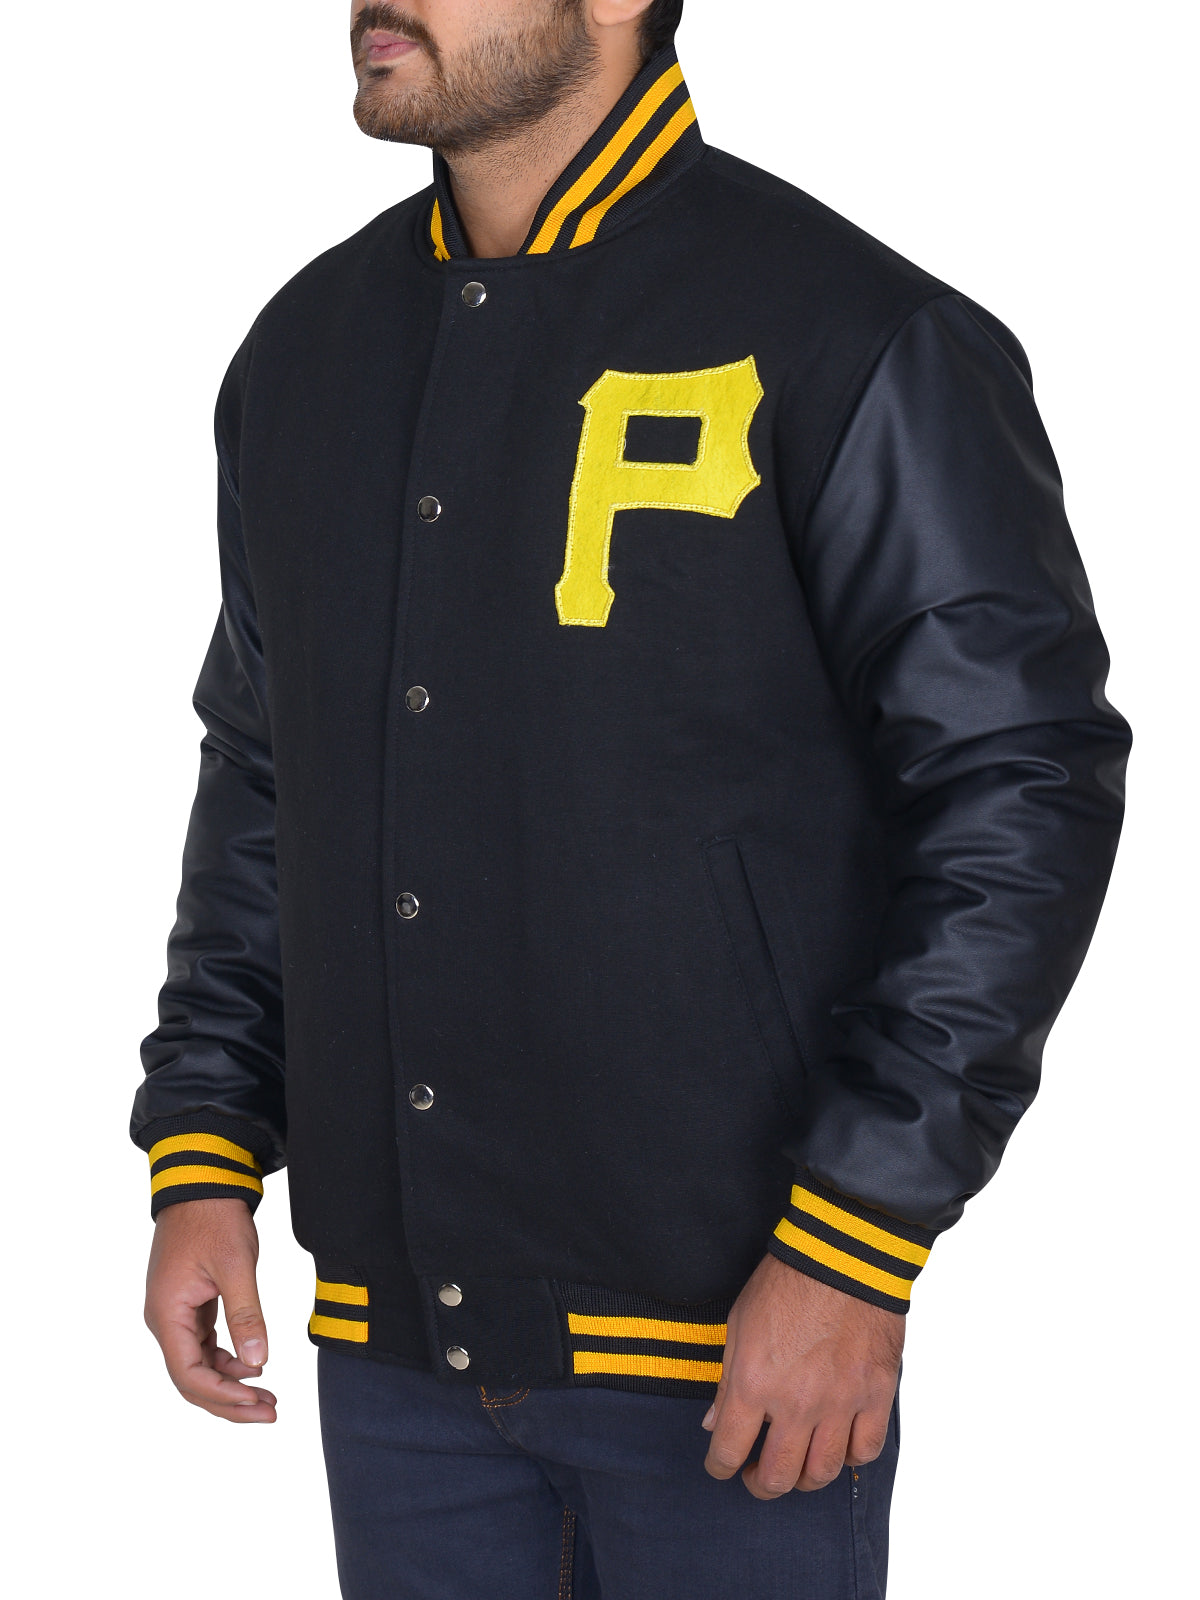 Mens Majestic Pittsburgh Pirates Letterman Bomber Black Jacket Jackets Empire